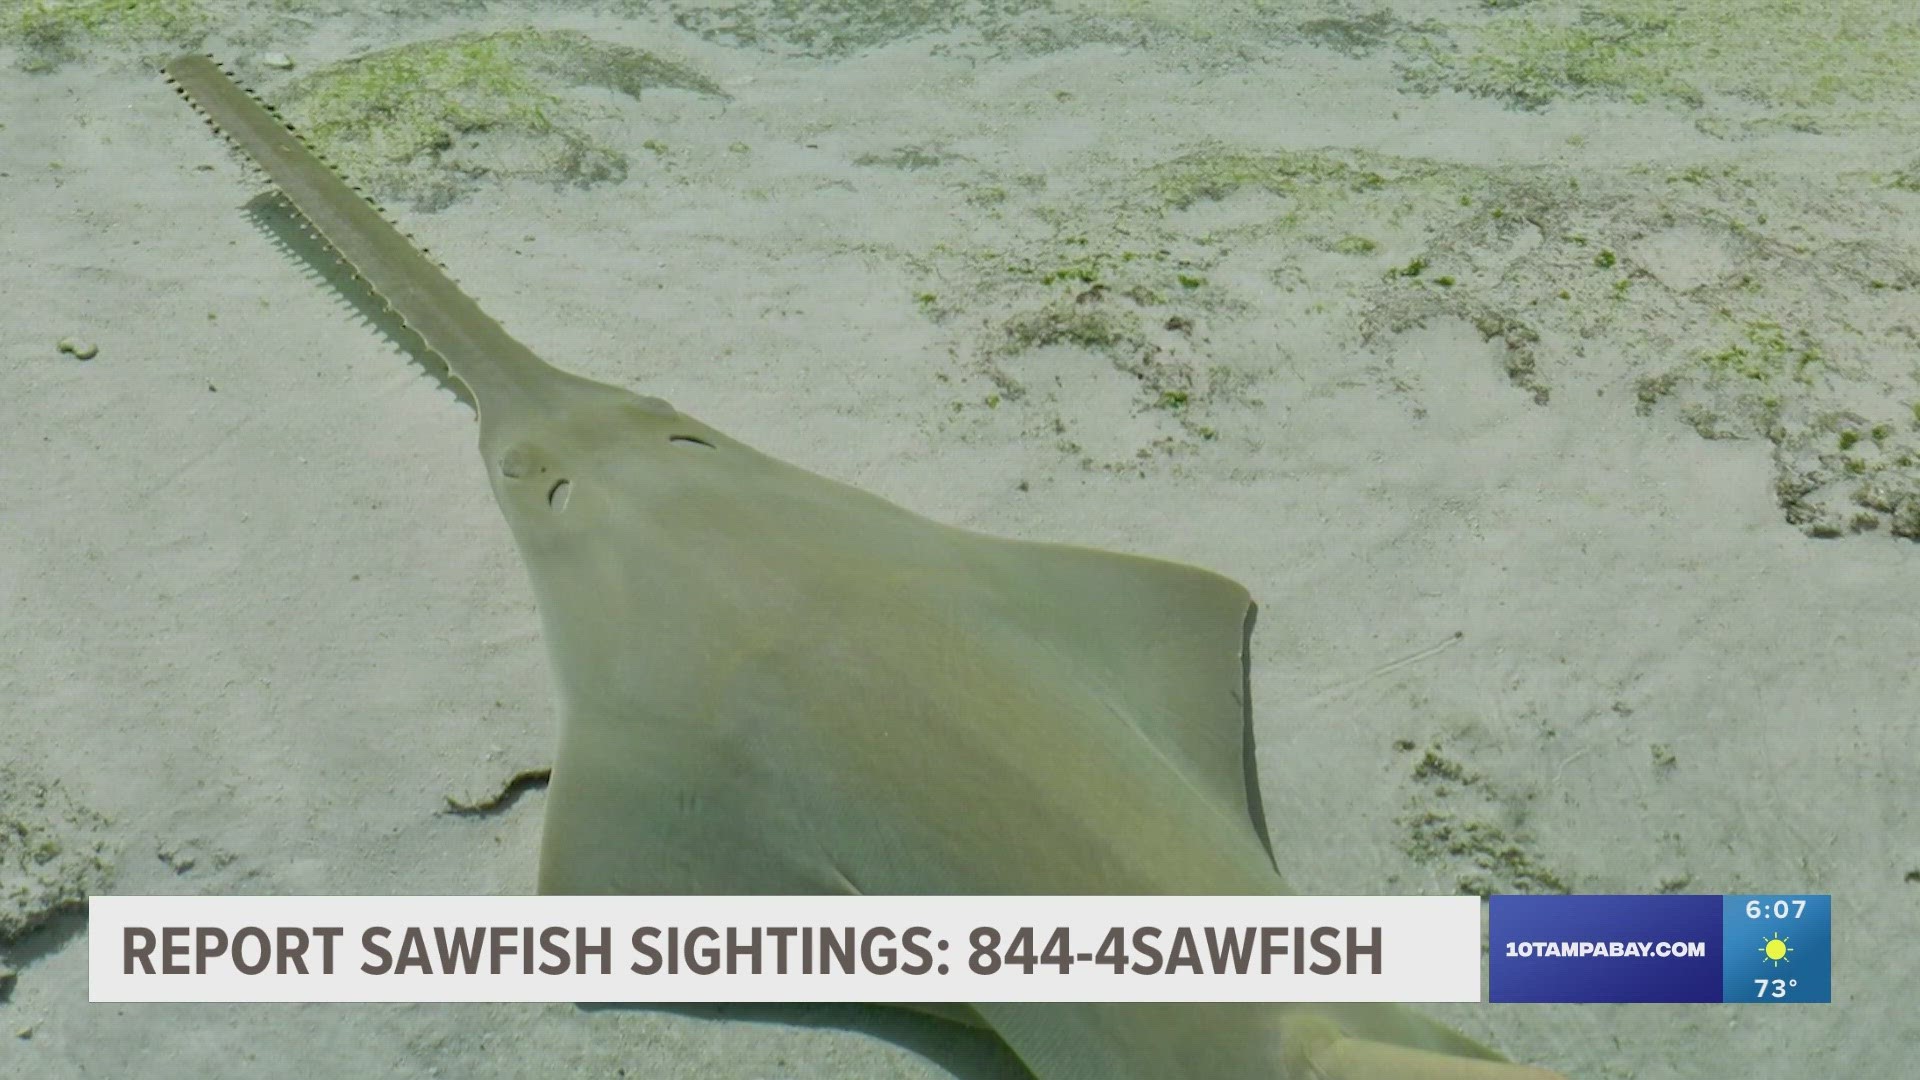 You can report sawfish sightings at 844-4SAWFISH.